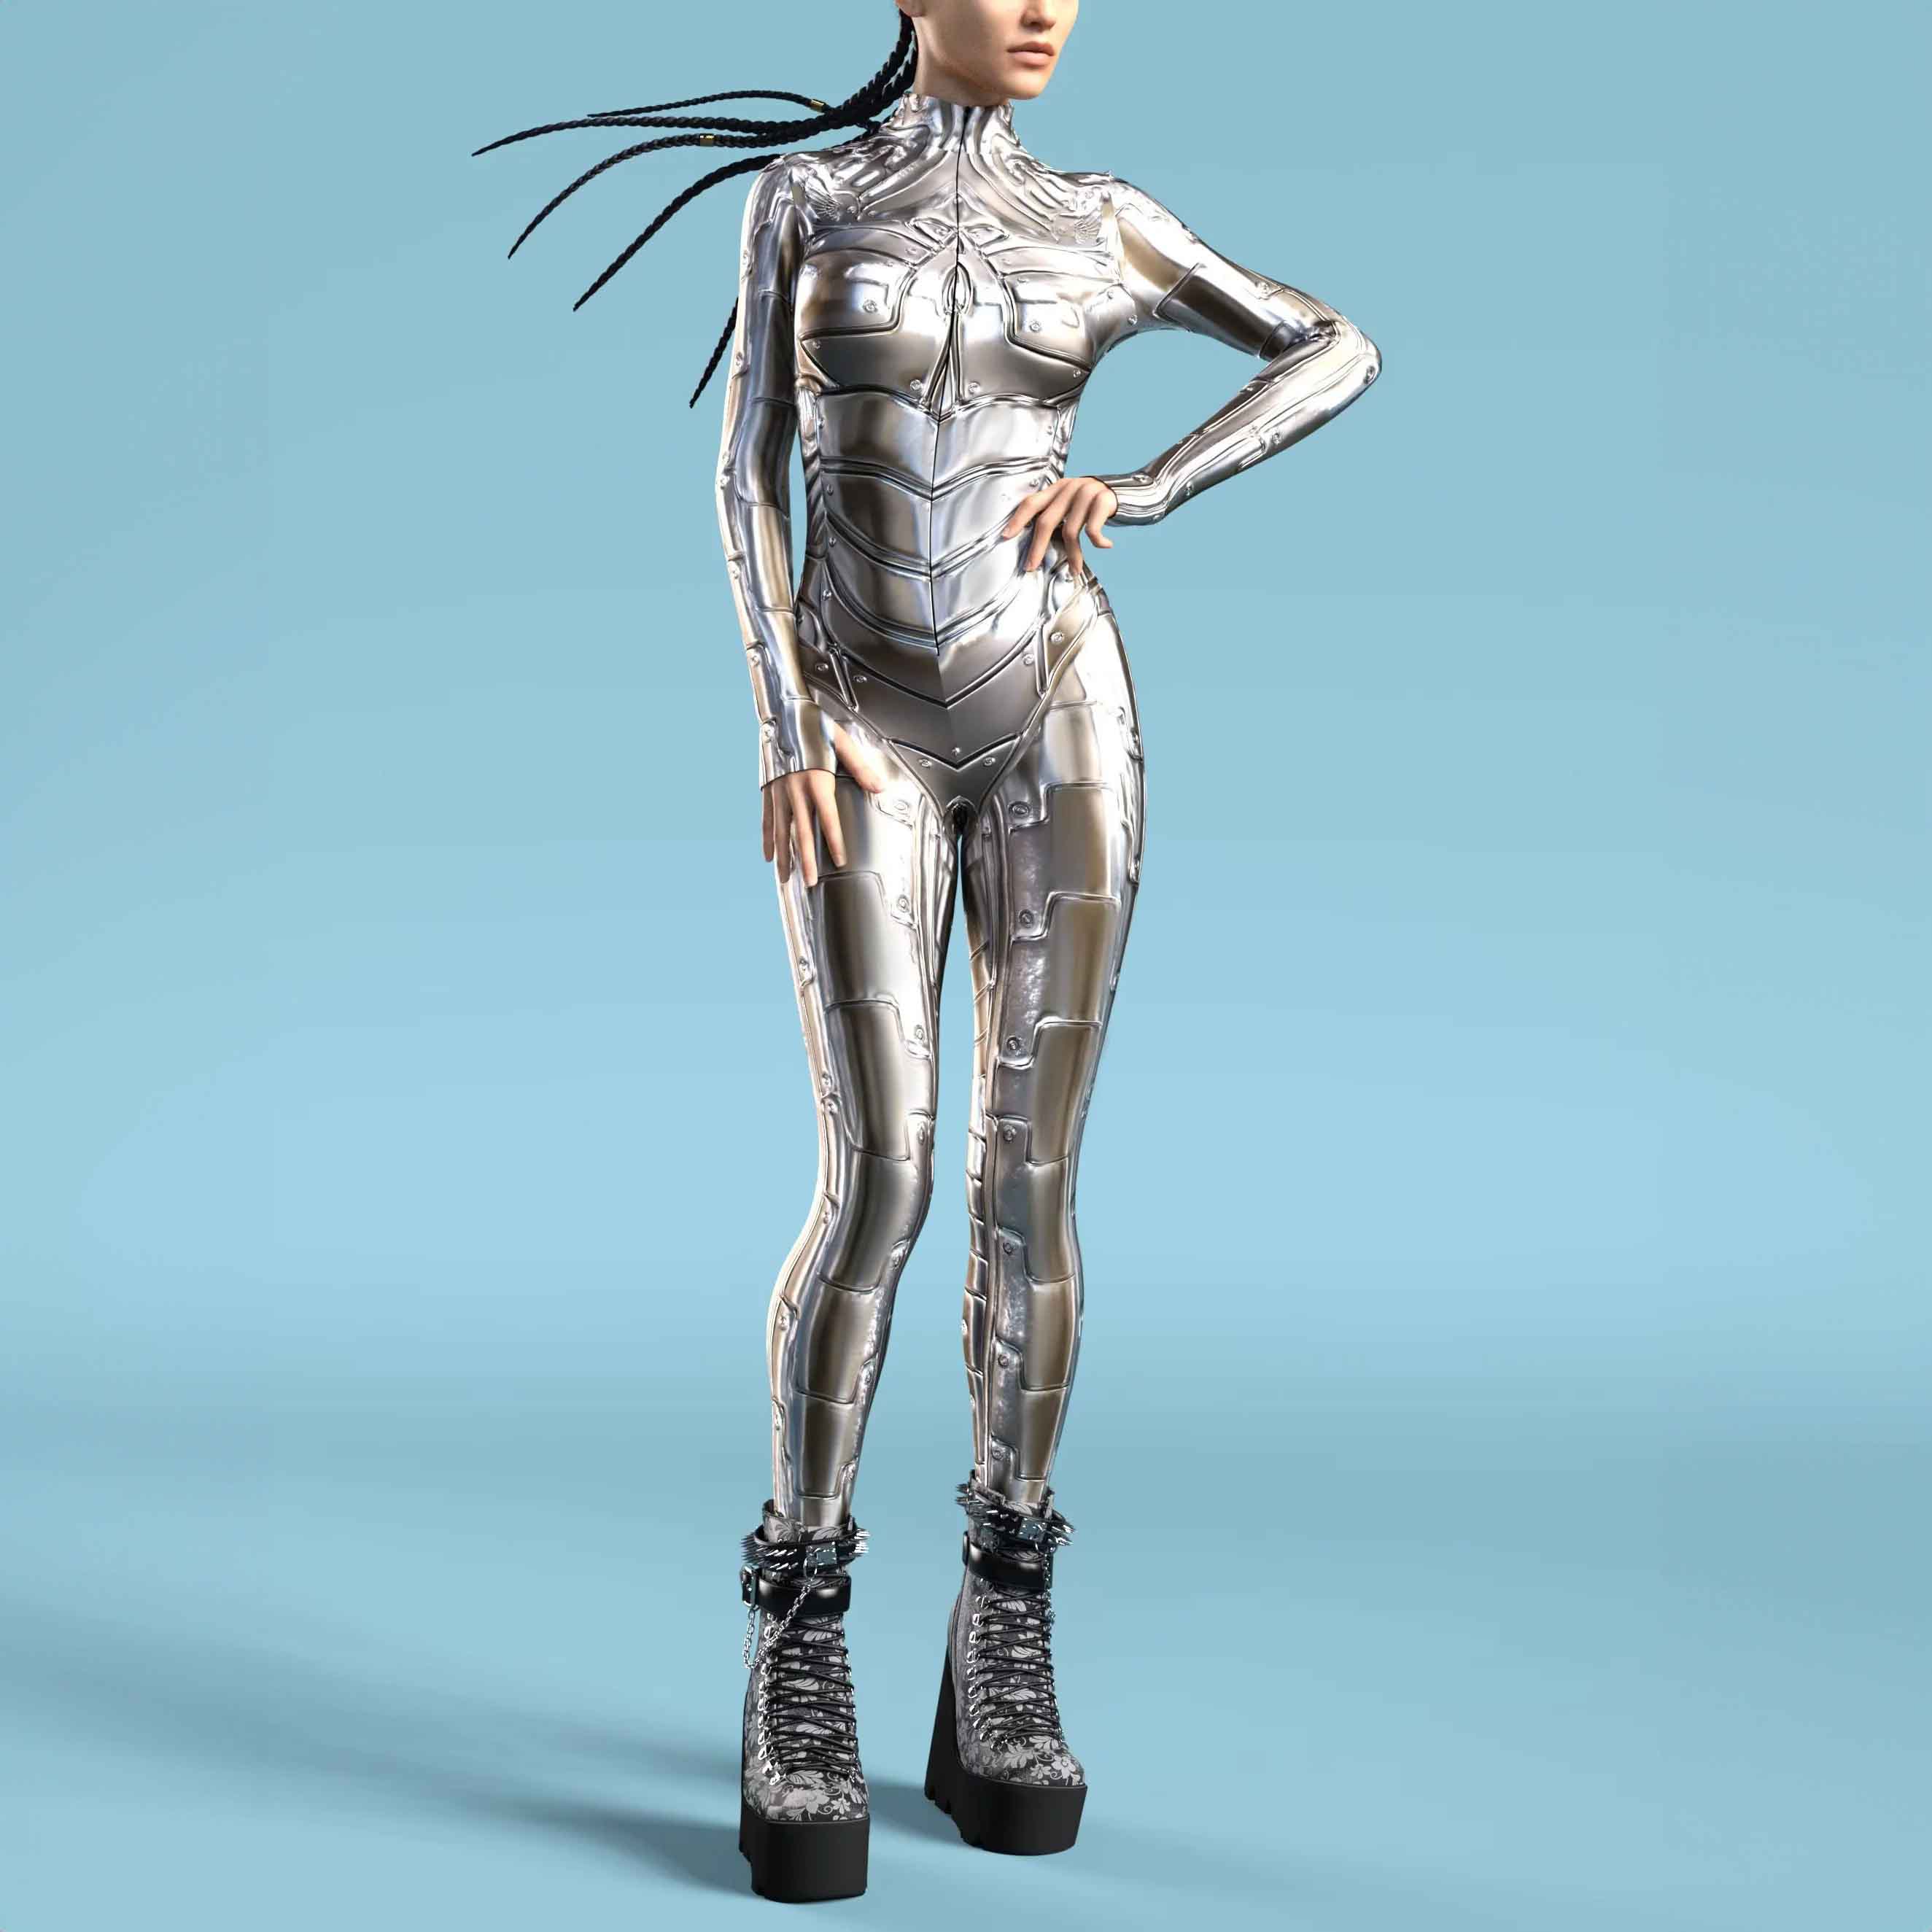 Body métallique ultra-moderne - Déclaration de mode futuriste